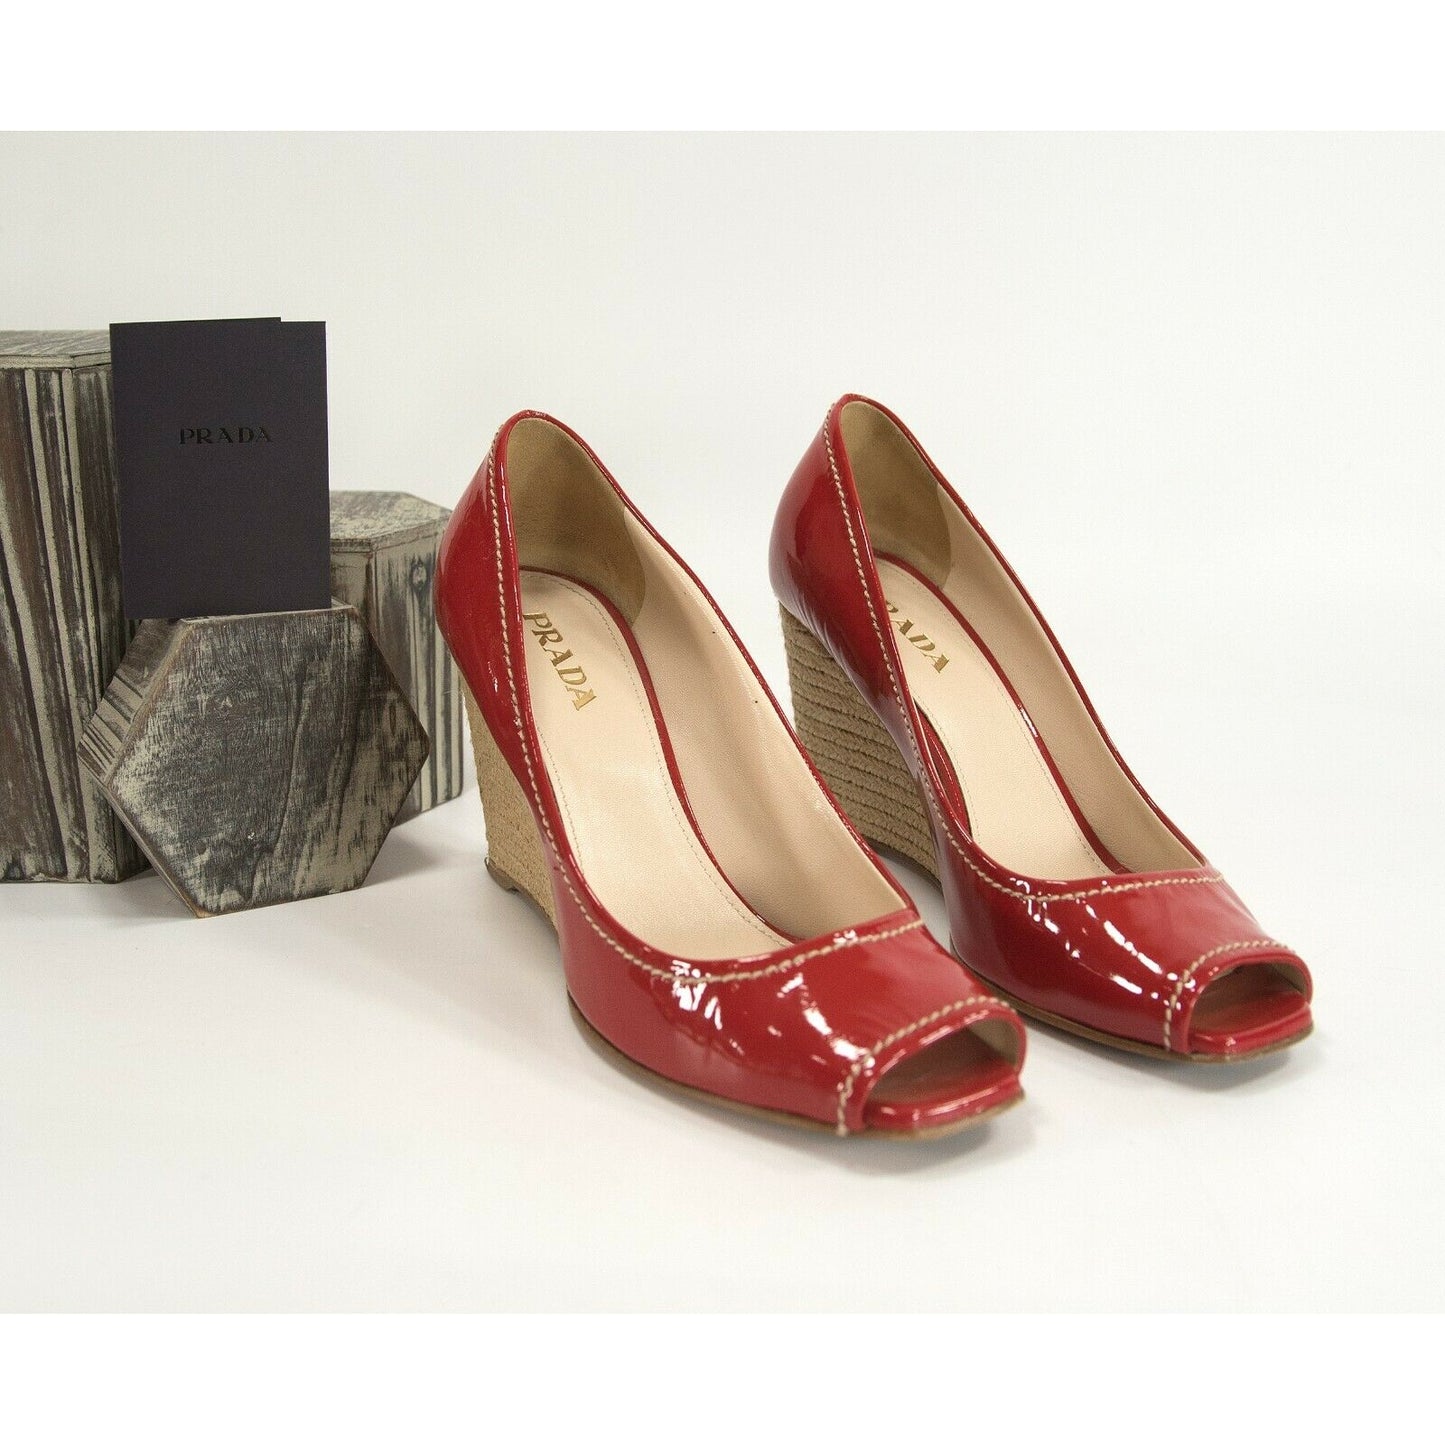 Prada Red Patent Leather Espadrille Wedge Peep Toe Heels Size 37 EUC